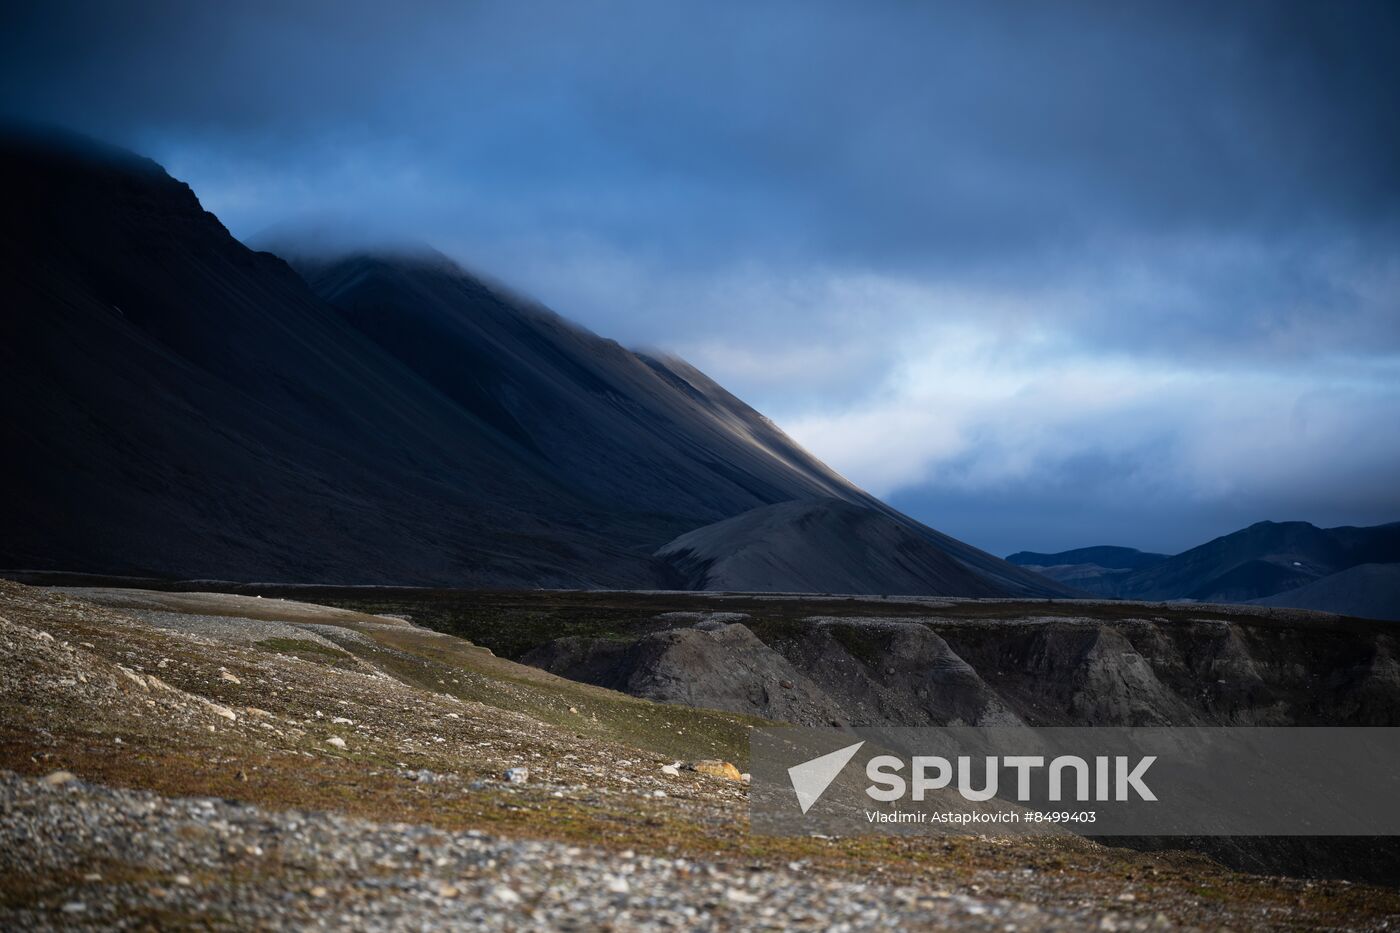 Norway Svalbard Archipelago